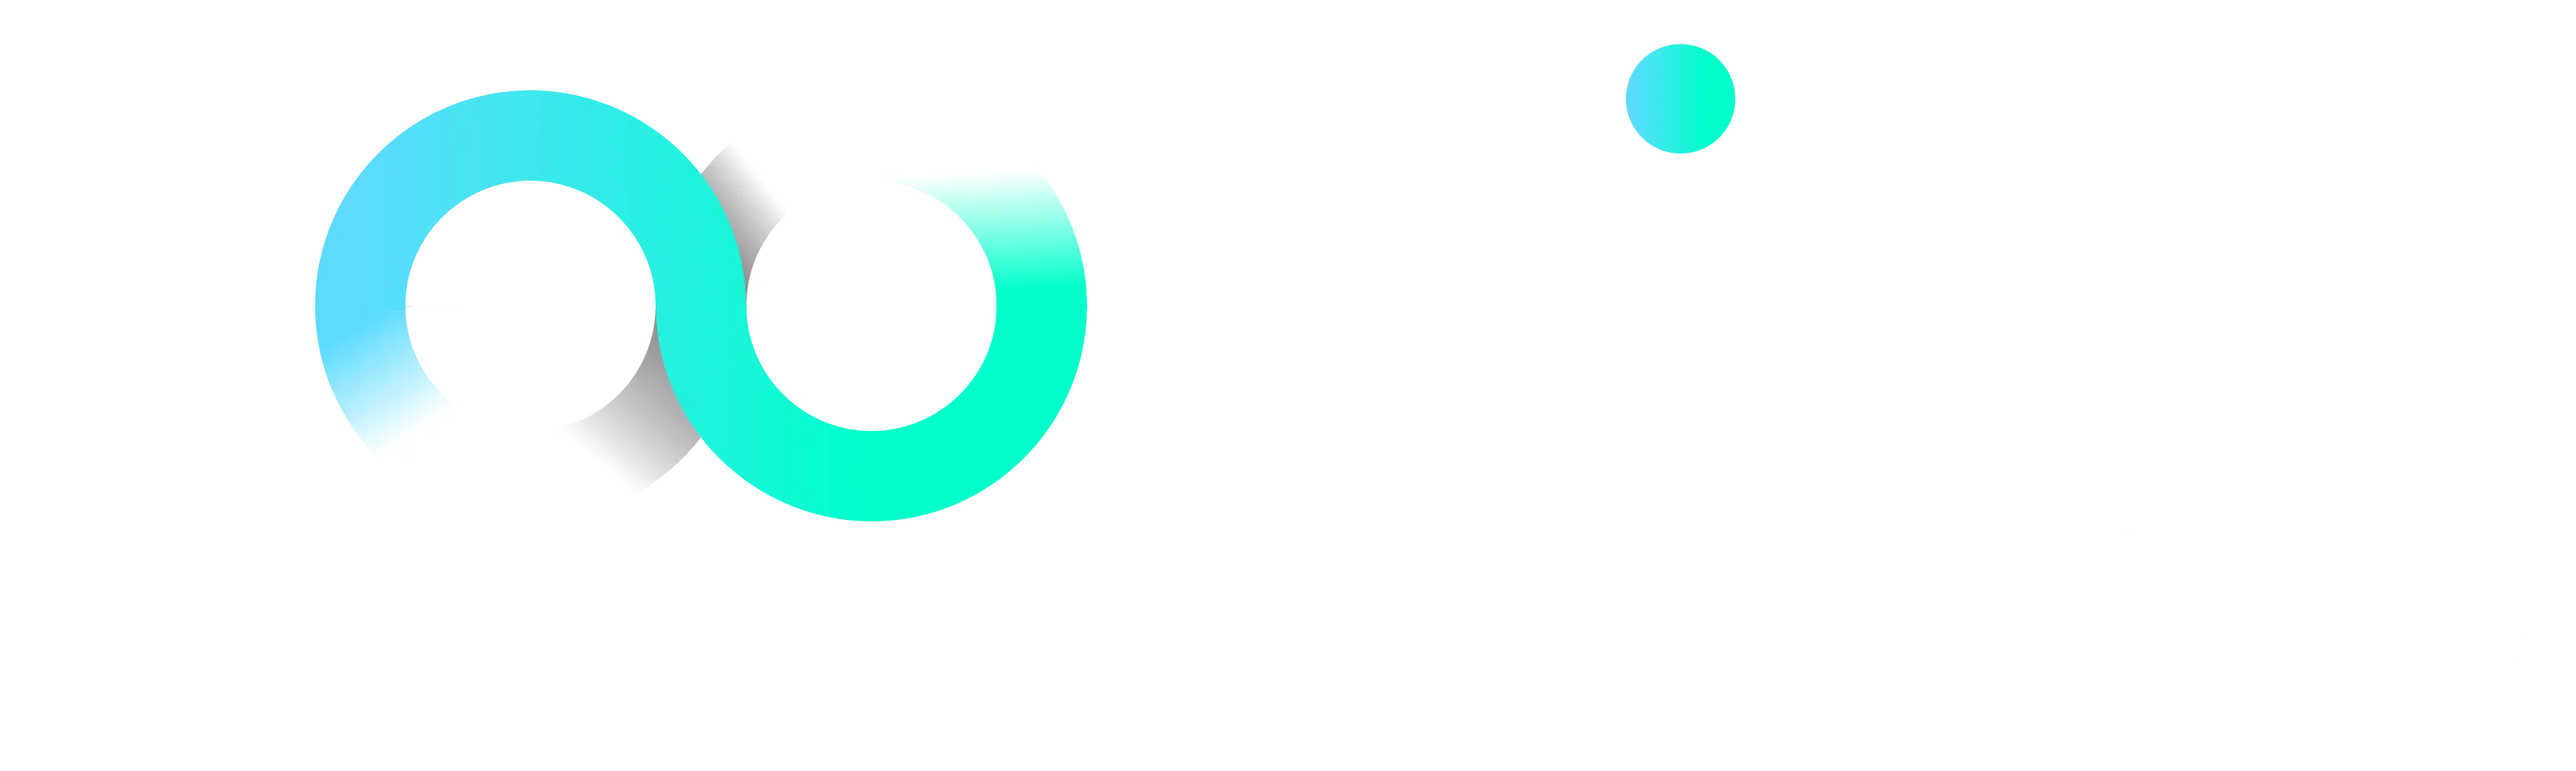 toolkitly logo